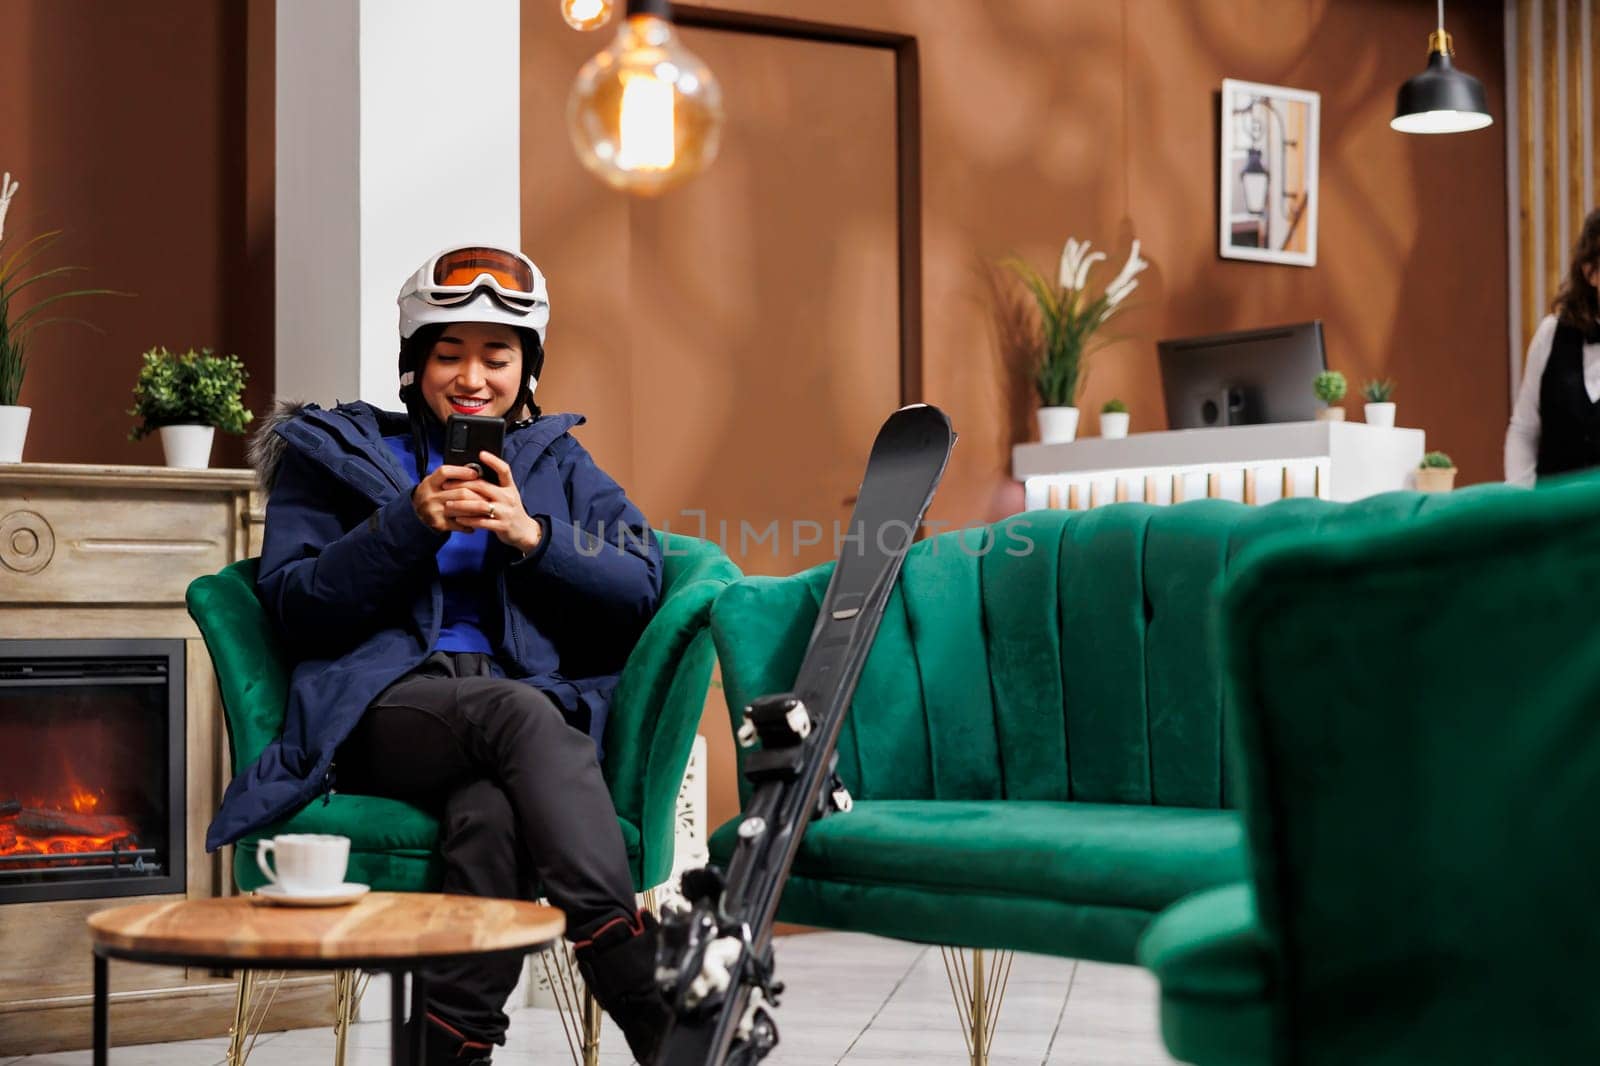 Traveler browisng phone in ski resort by DCStudio